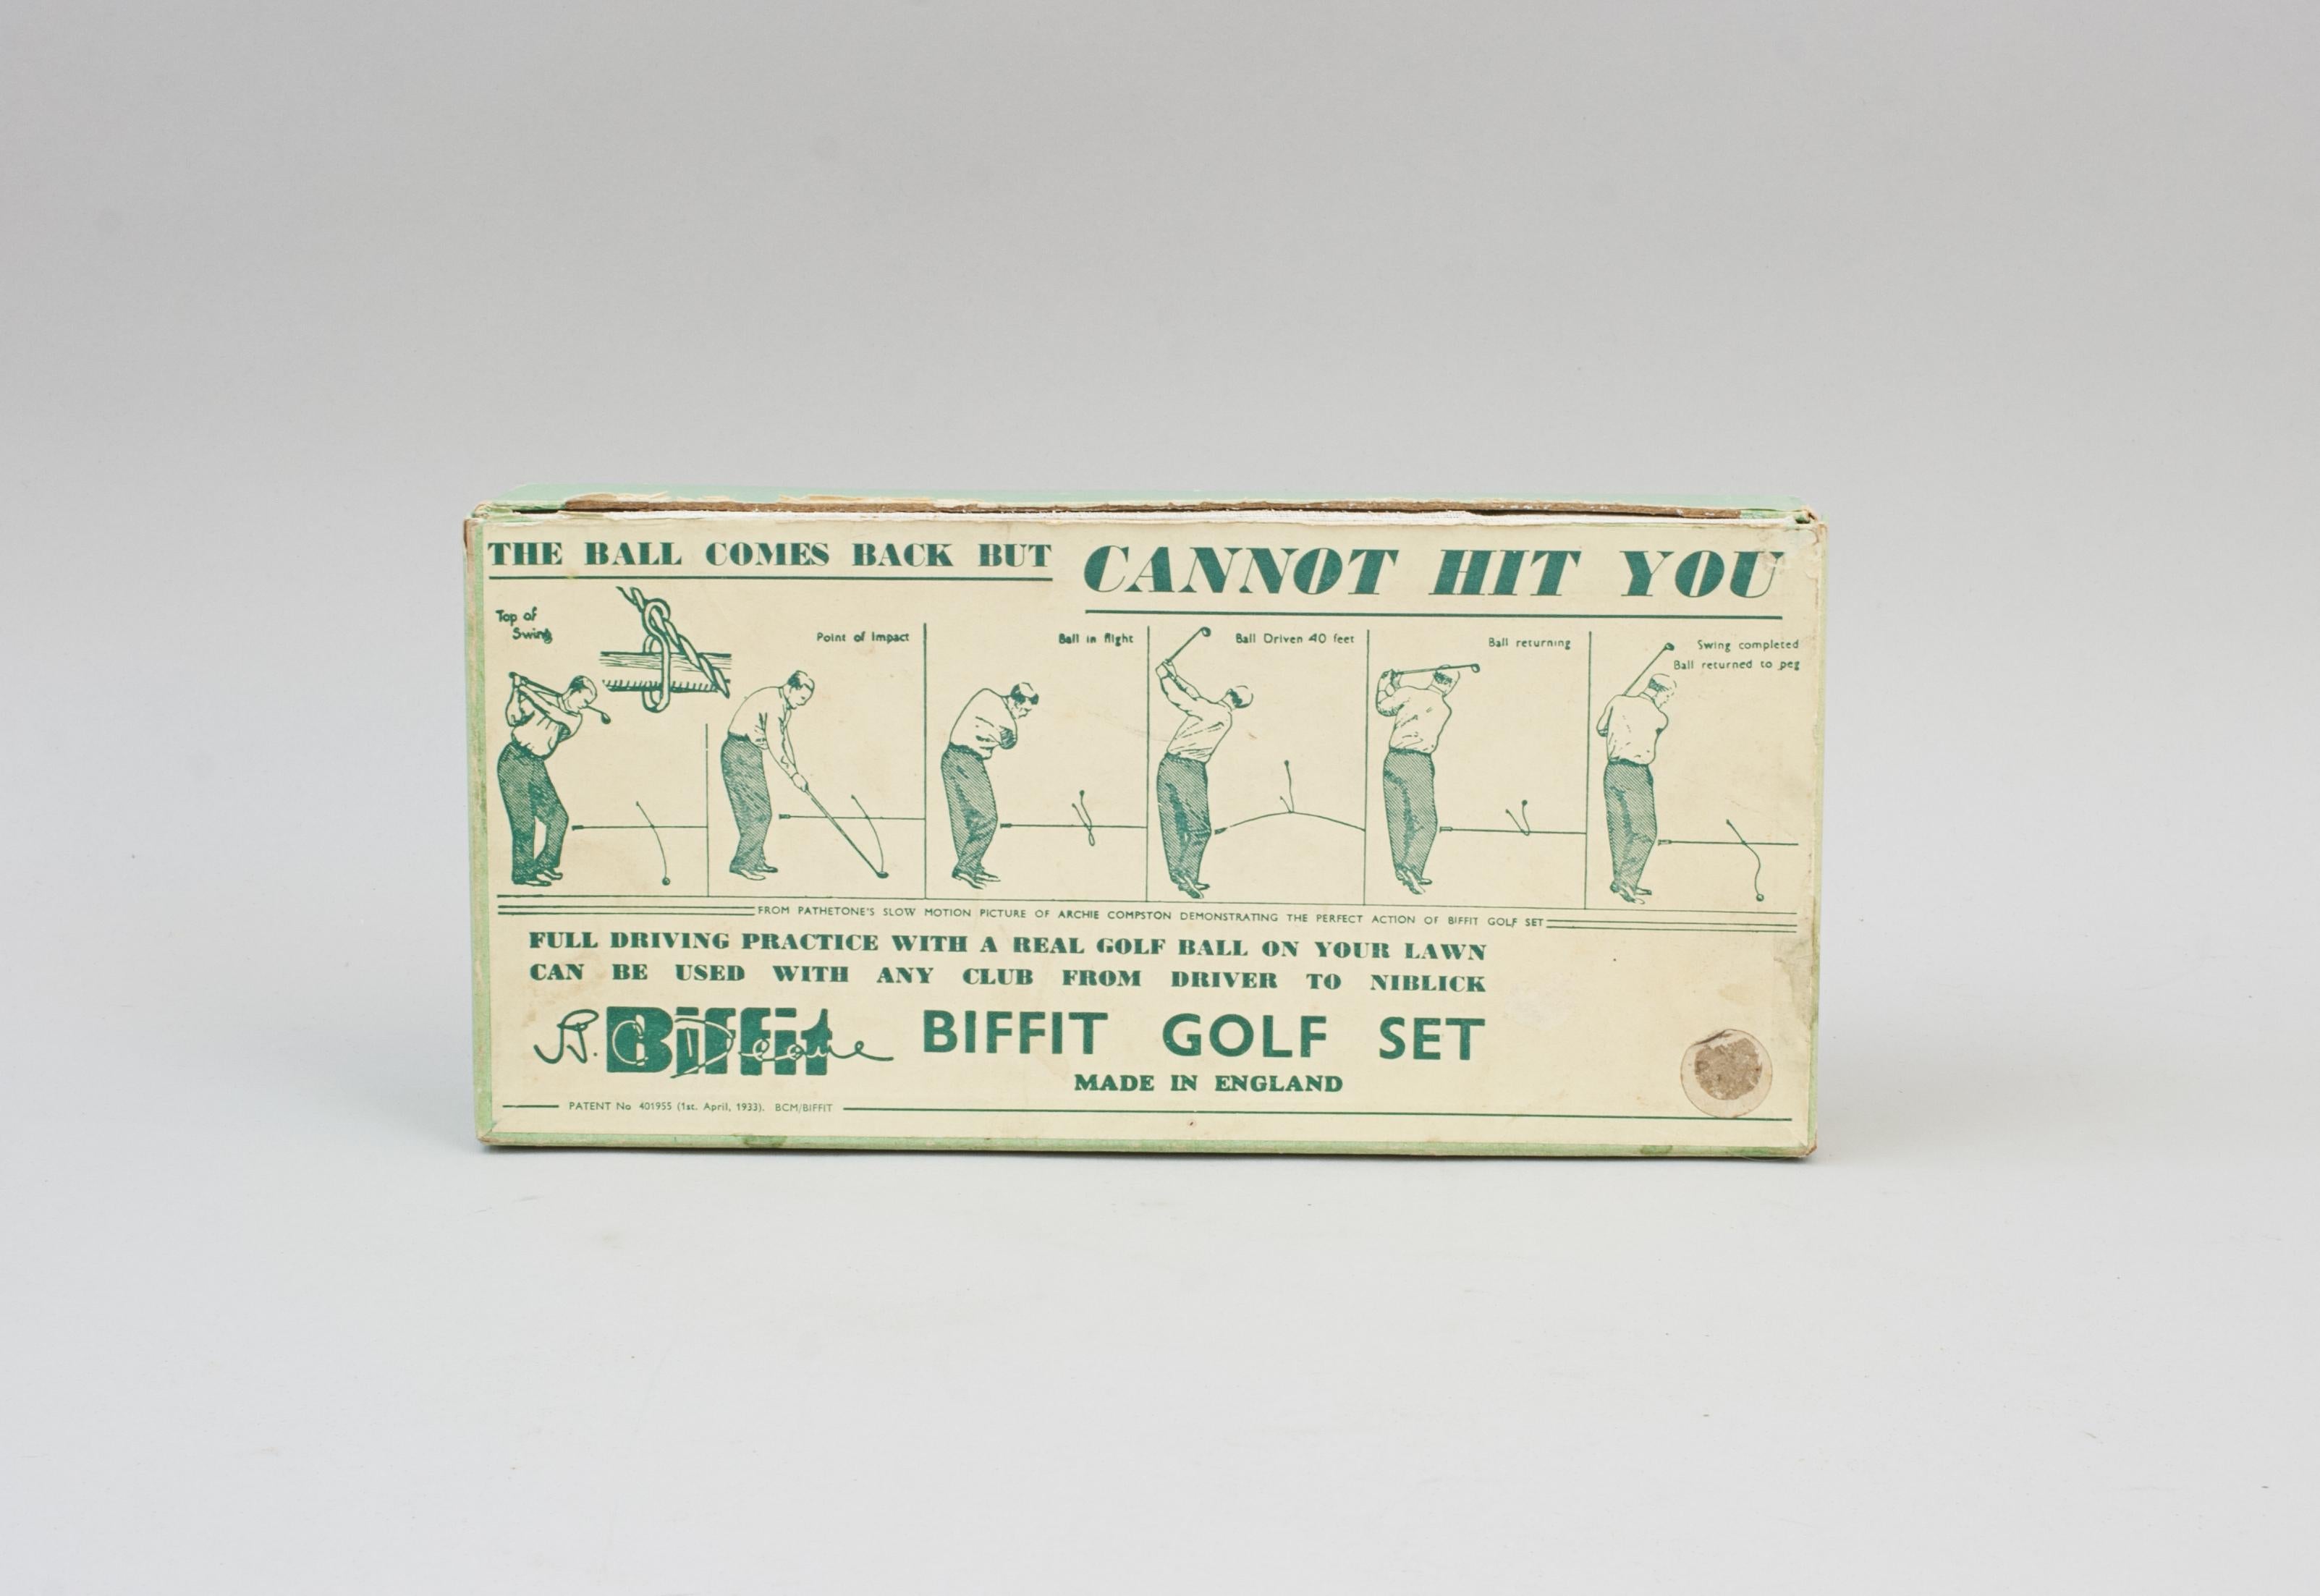 Vintage Biffit Golf Trainingshilfe.
Ein original 